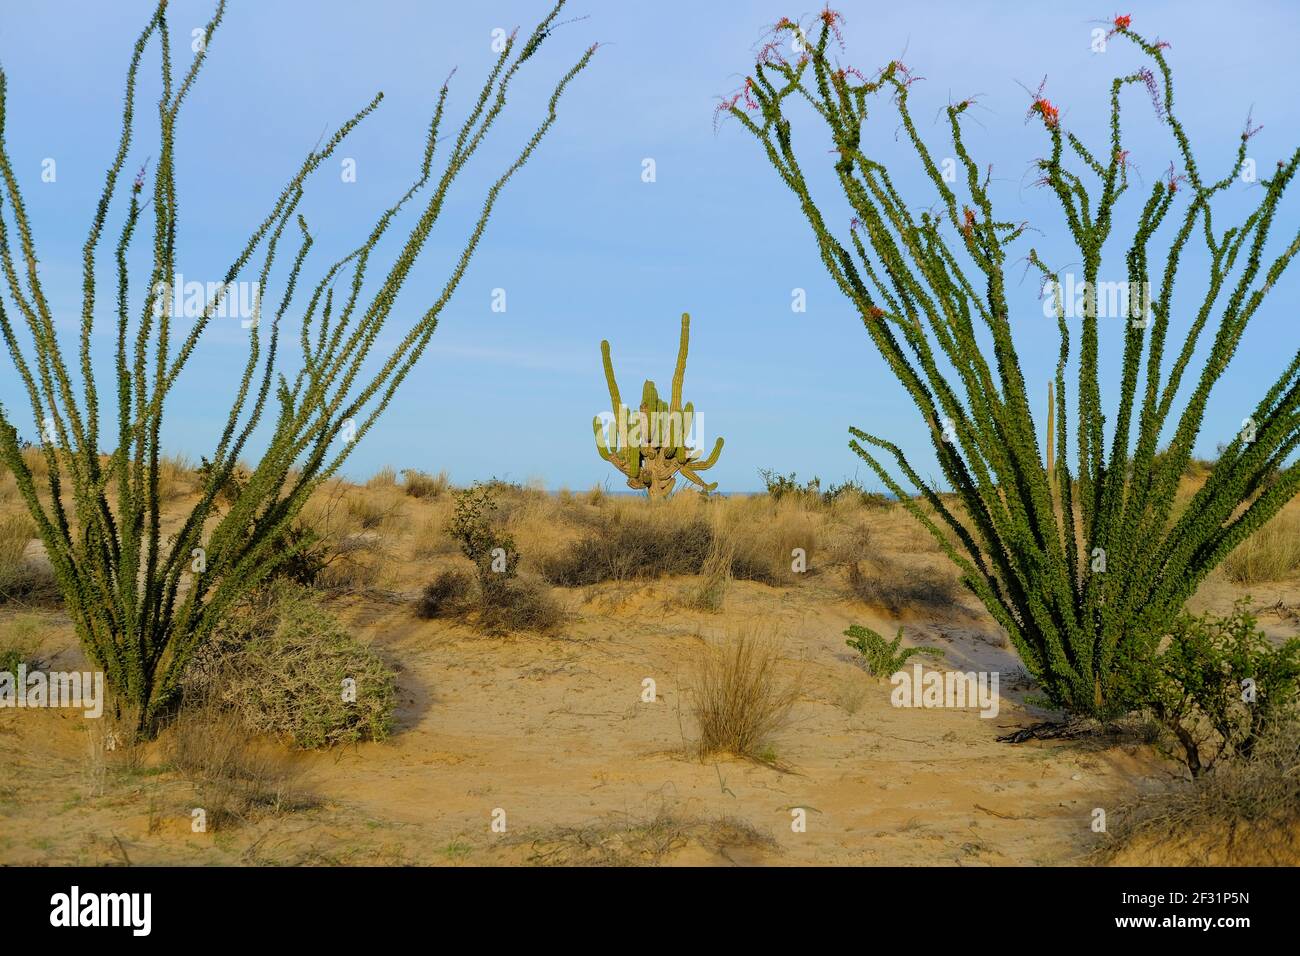 Pachycereus pringlei, cardon gigante messicano, cactus elefante incorniciato da due arbusti di ocotillo in fiore; Valle dei Giganti, San Felipe, Baja California. Foto Stock